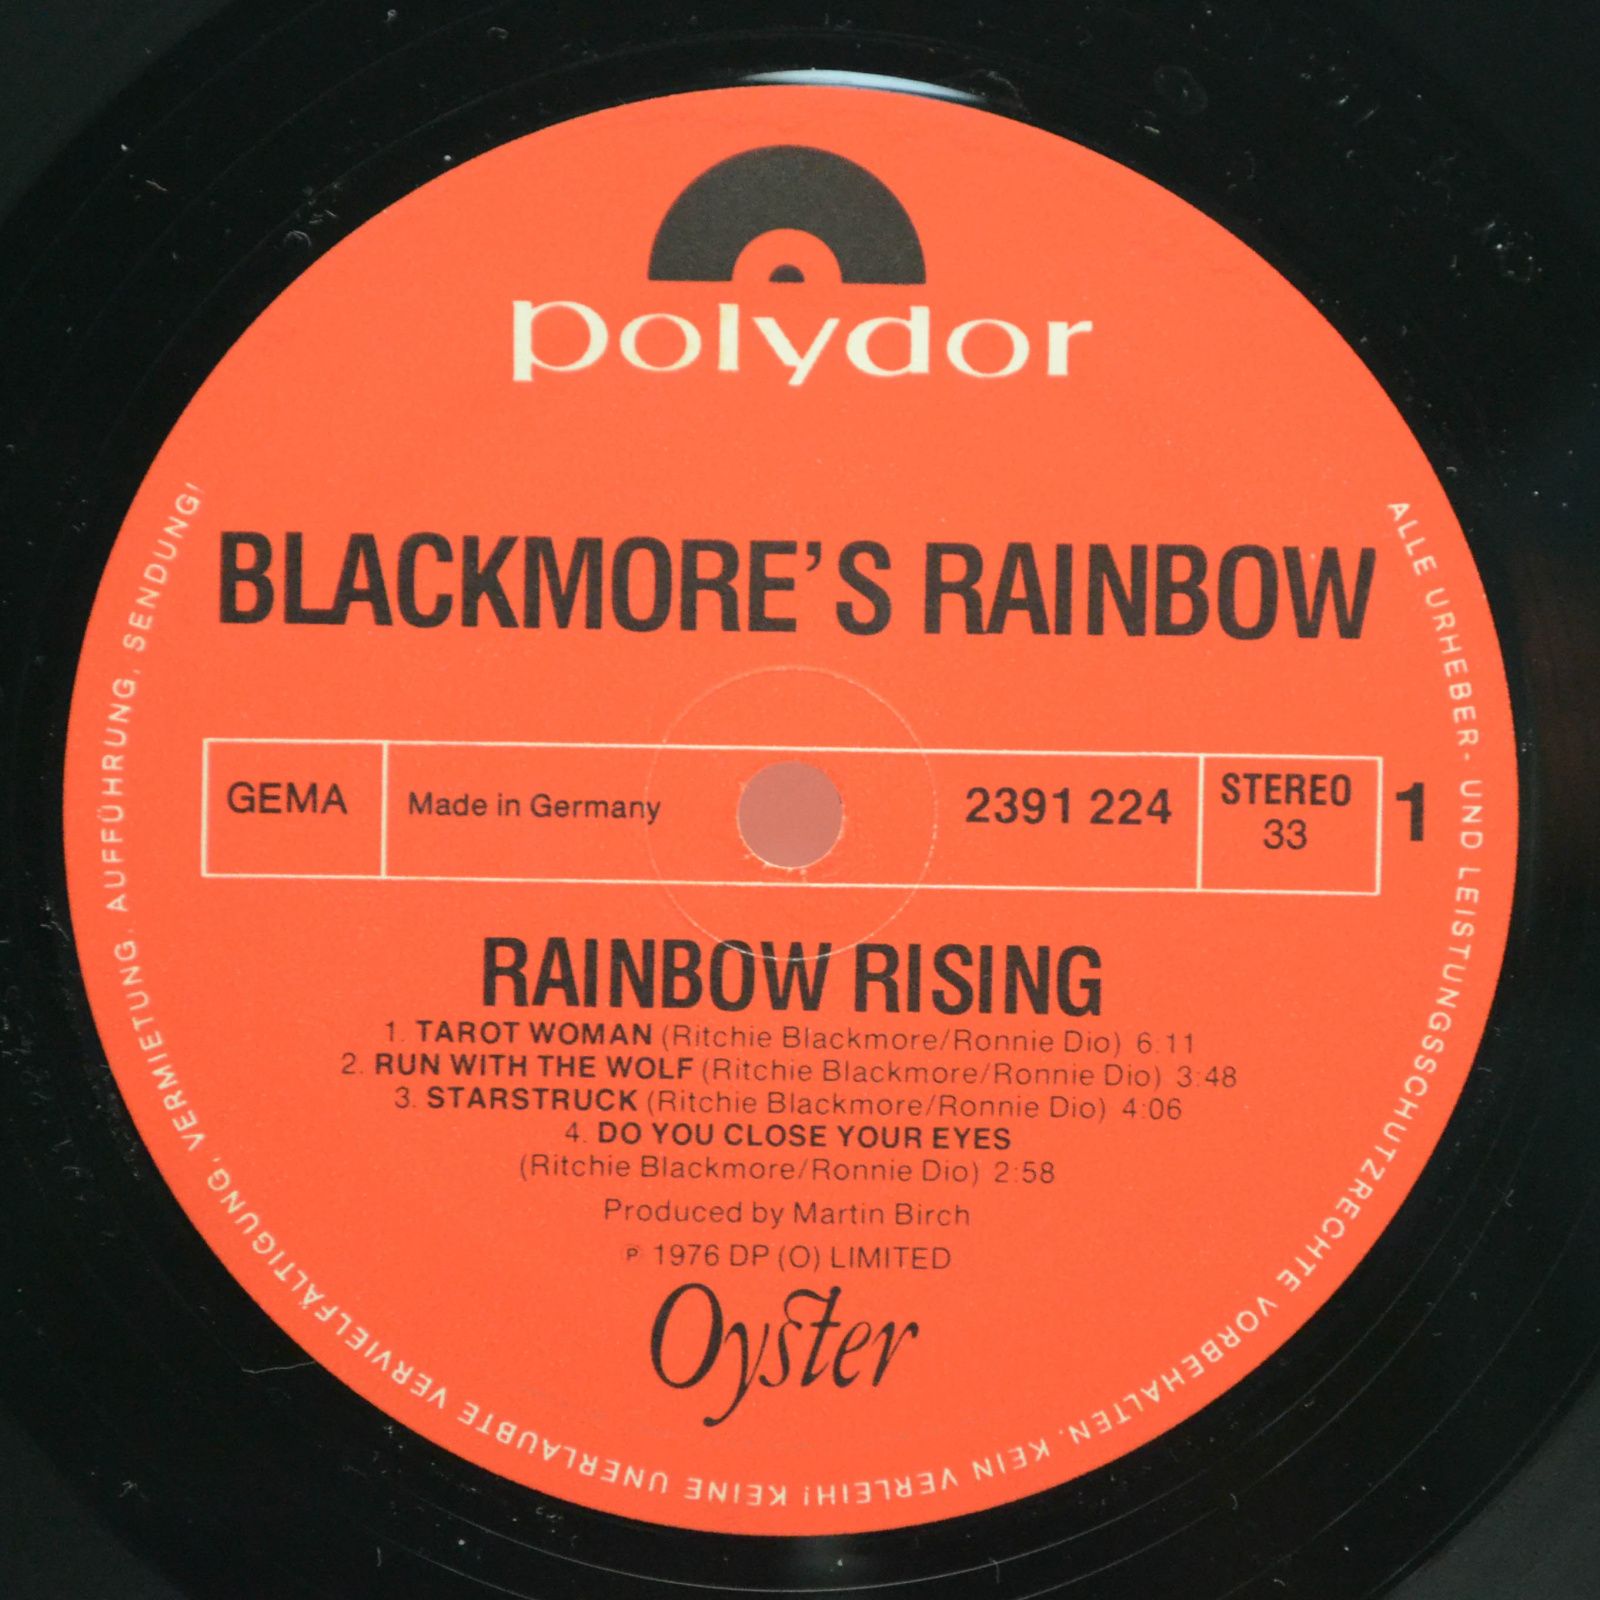 Rainbow — Rising, 1976